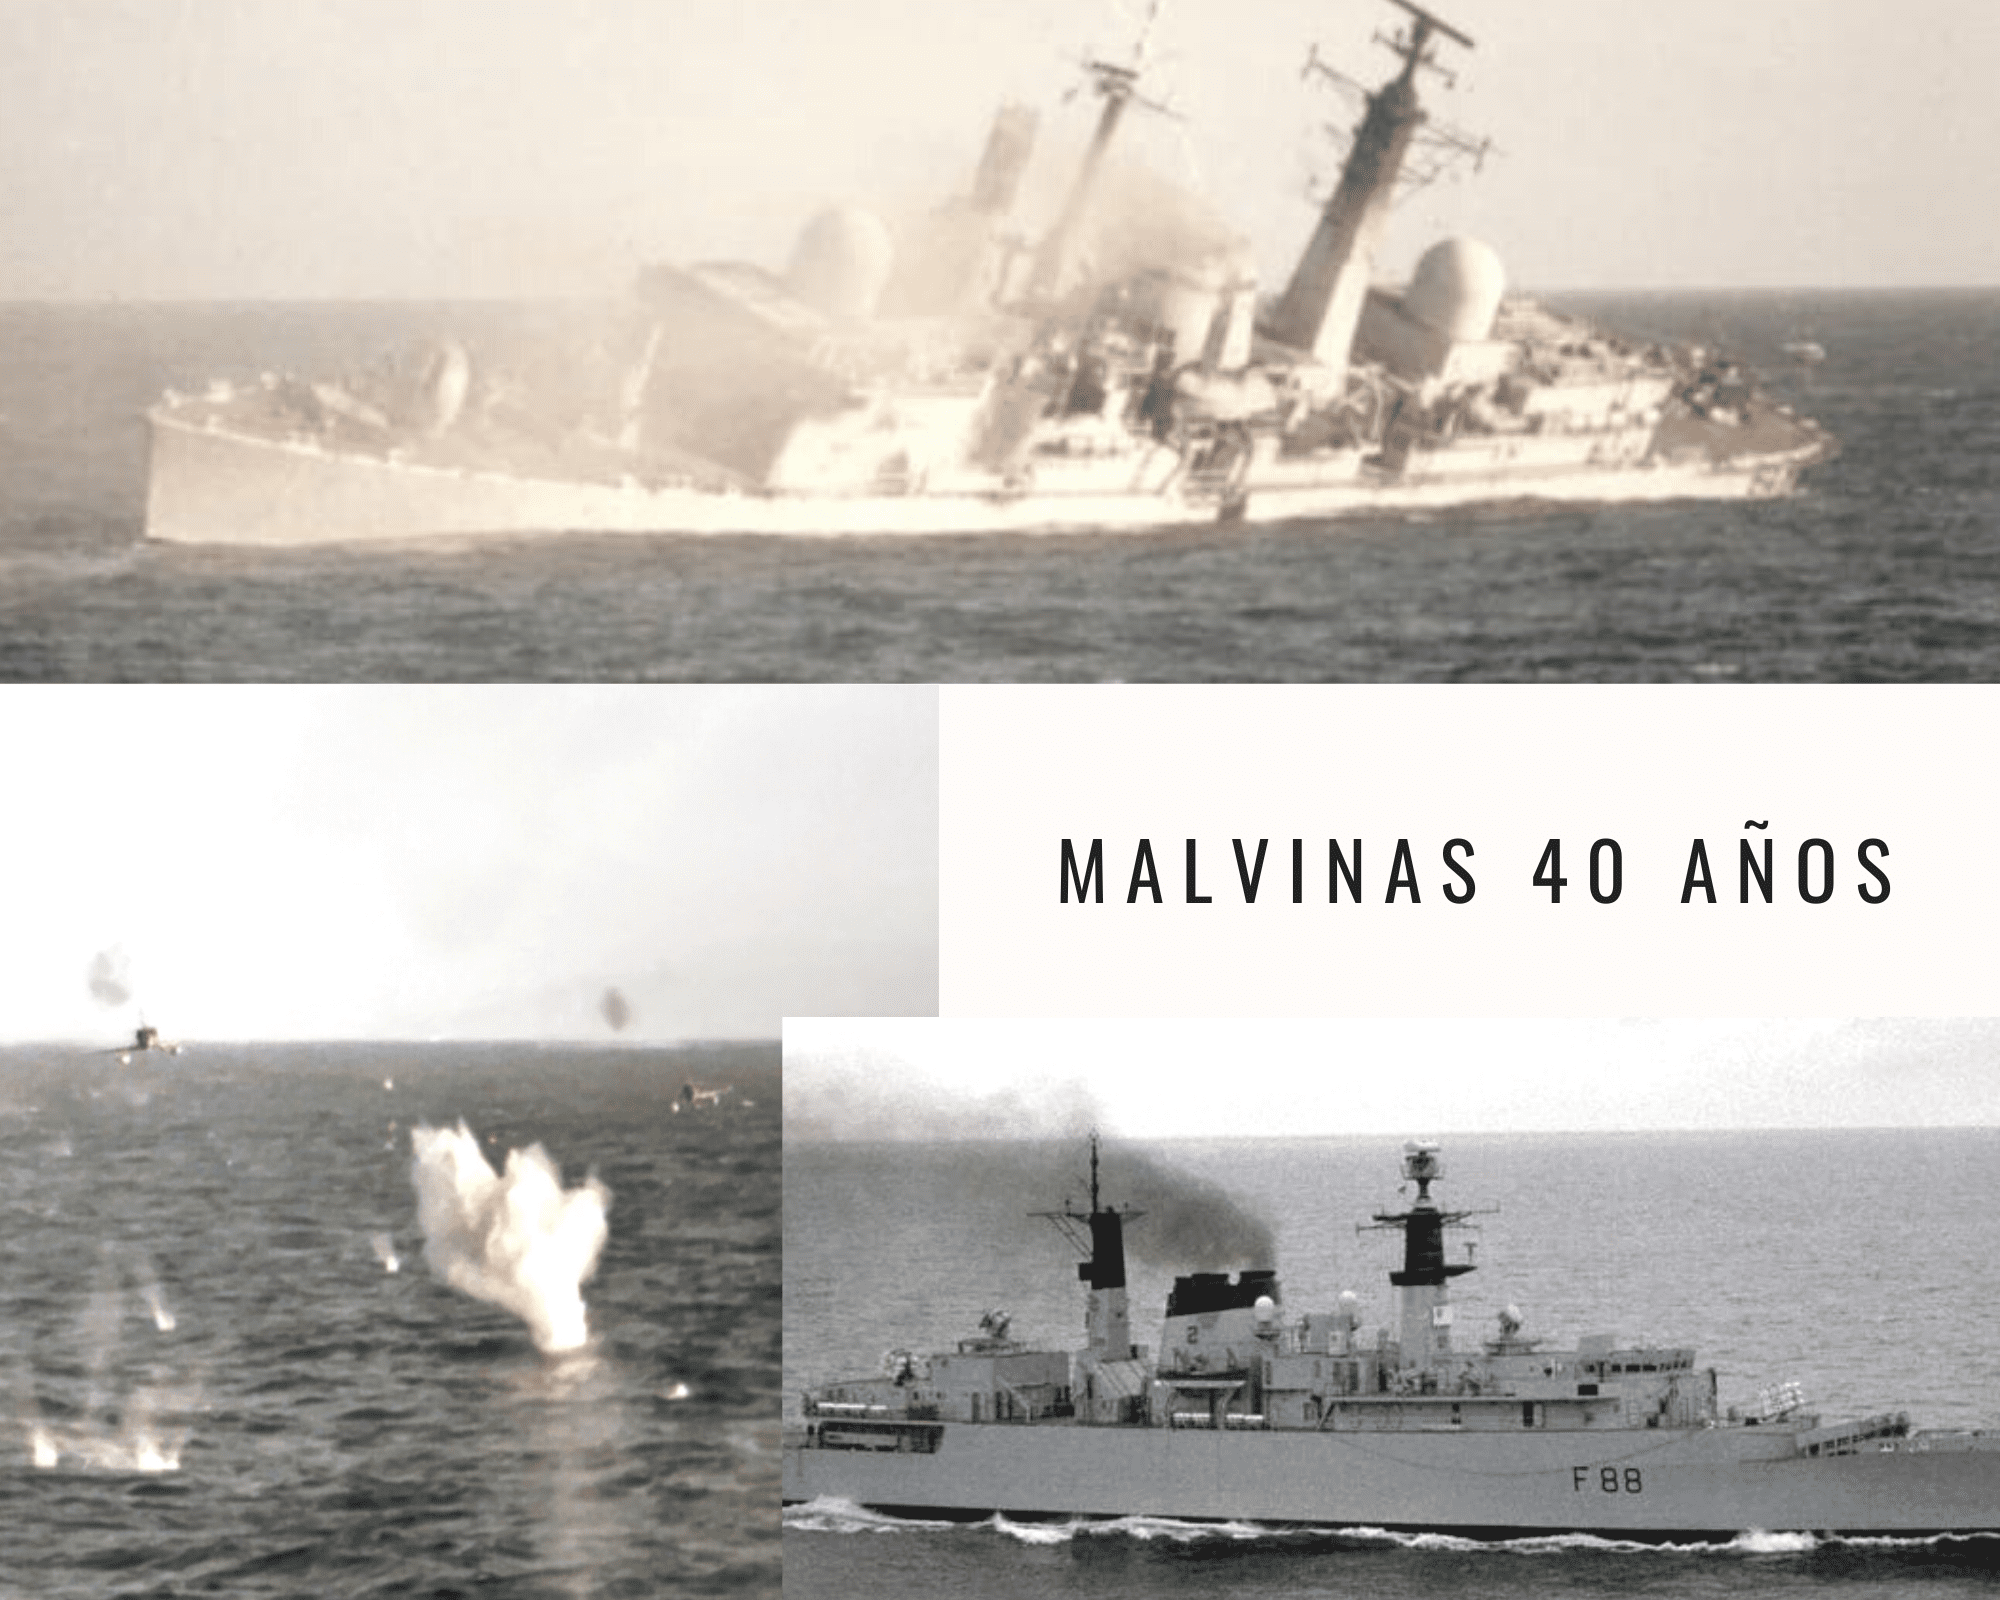 Malvinas 40 – Air Argentinas successfully attacked HMS Conventry, HMS Broadsword and SS Atlantic Conveyor